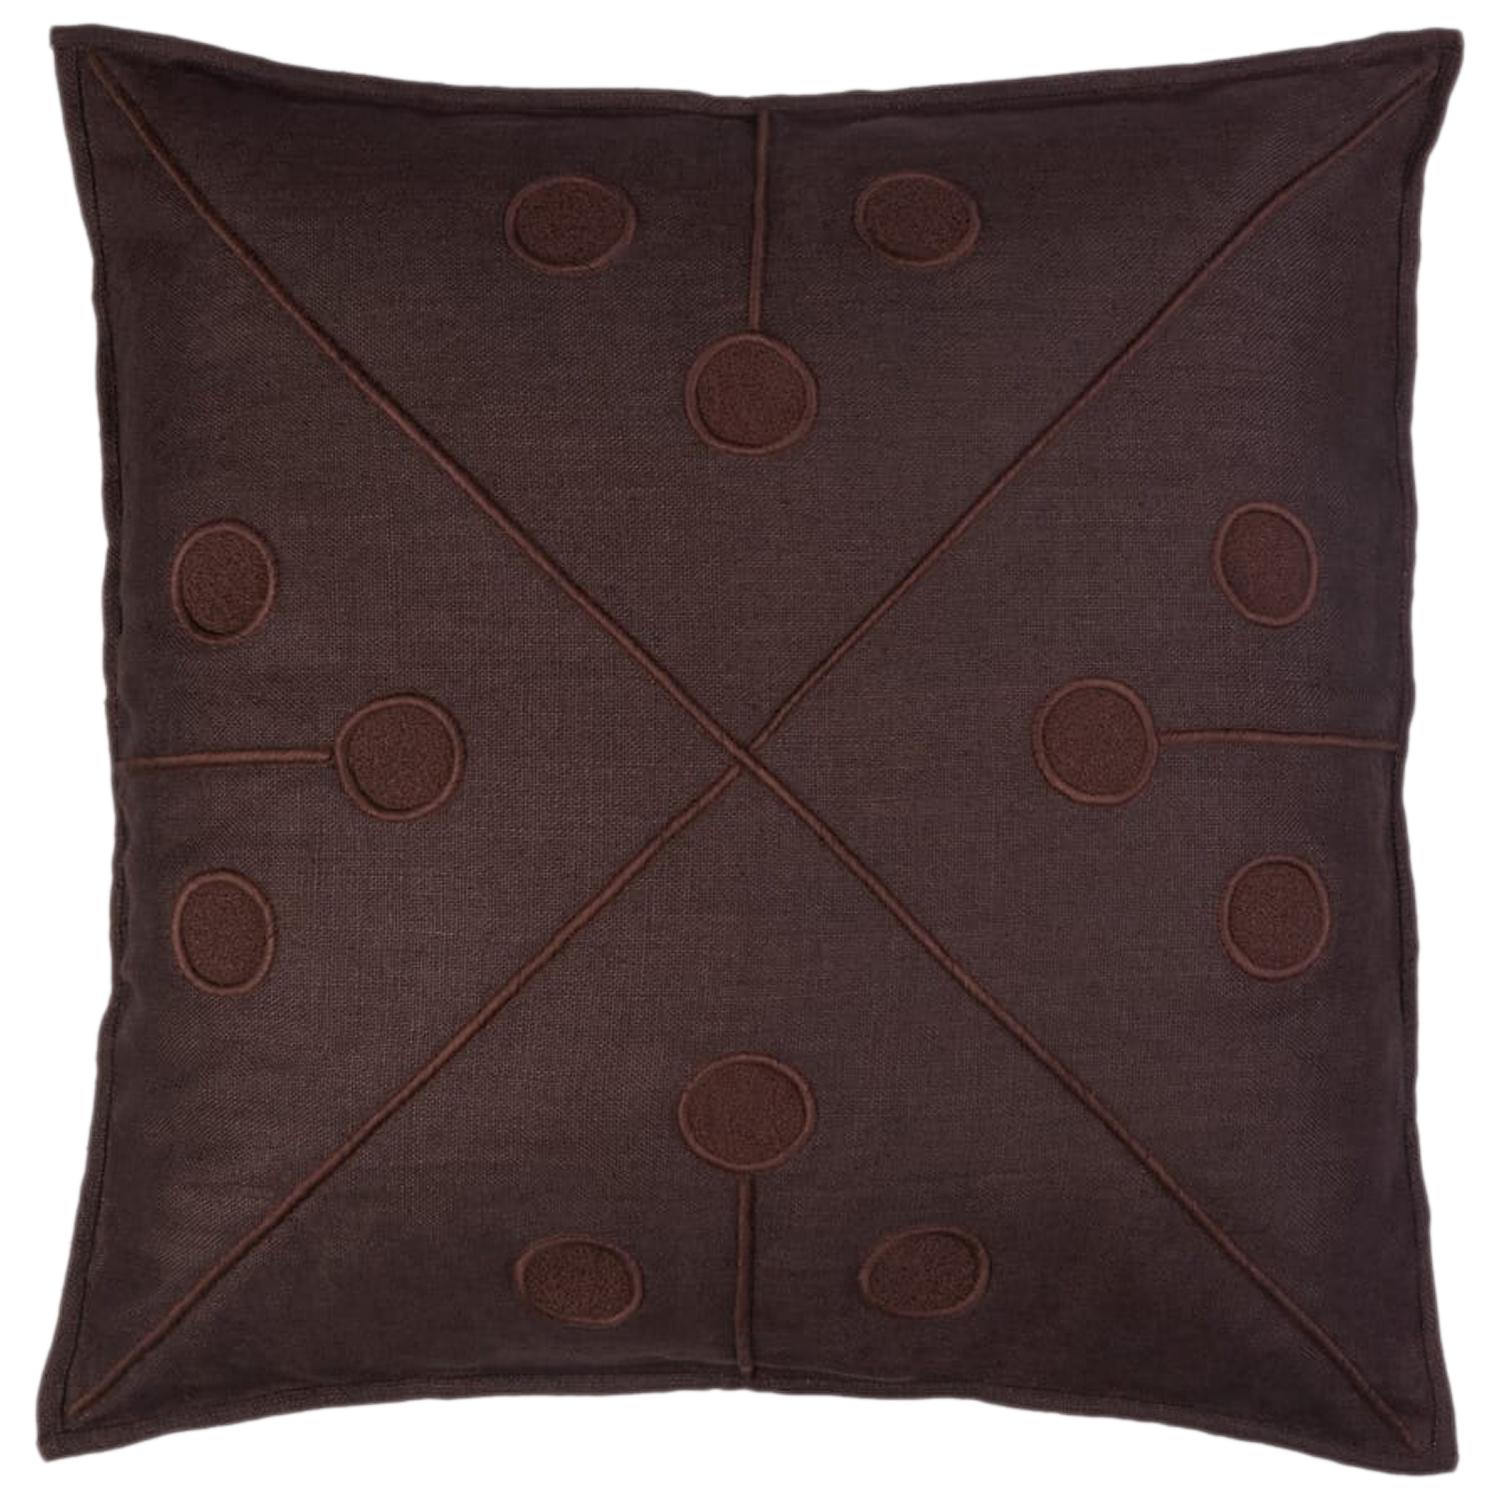 Ukiyo Hand Embroidered Brown Linen Pillow Cover